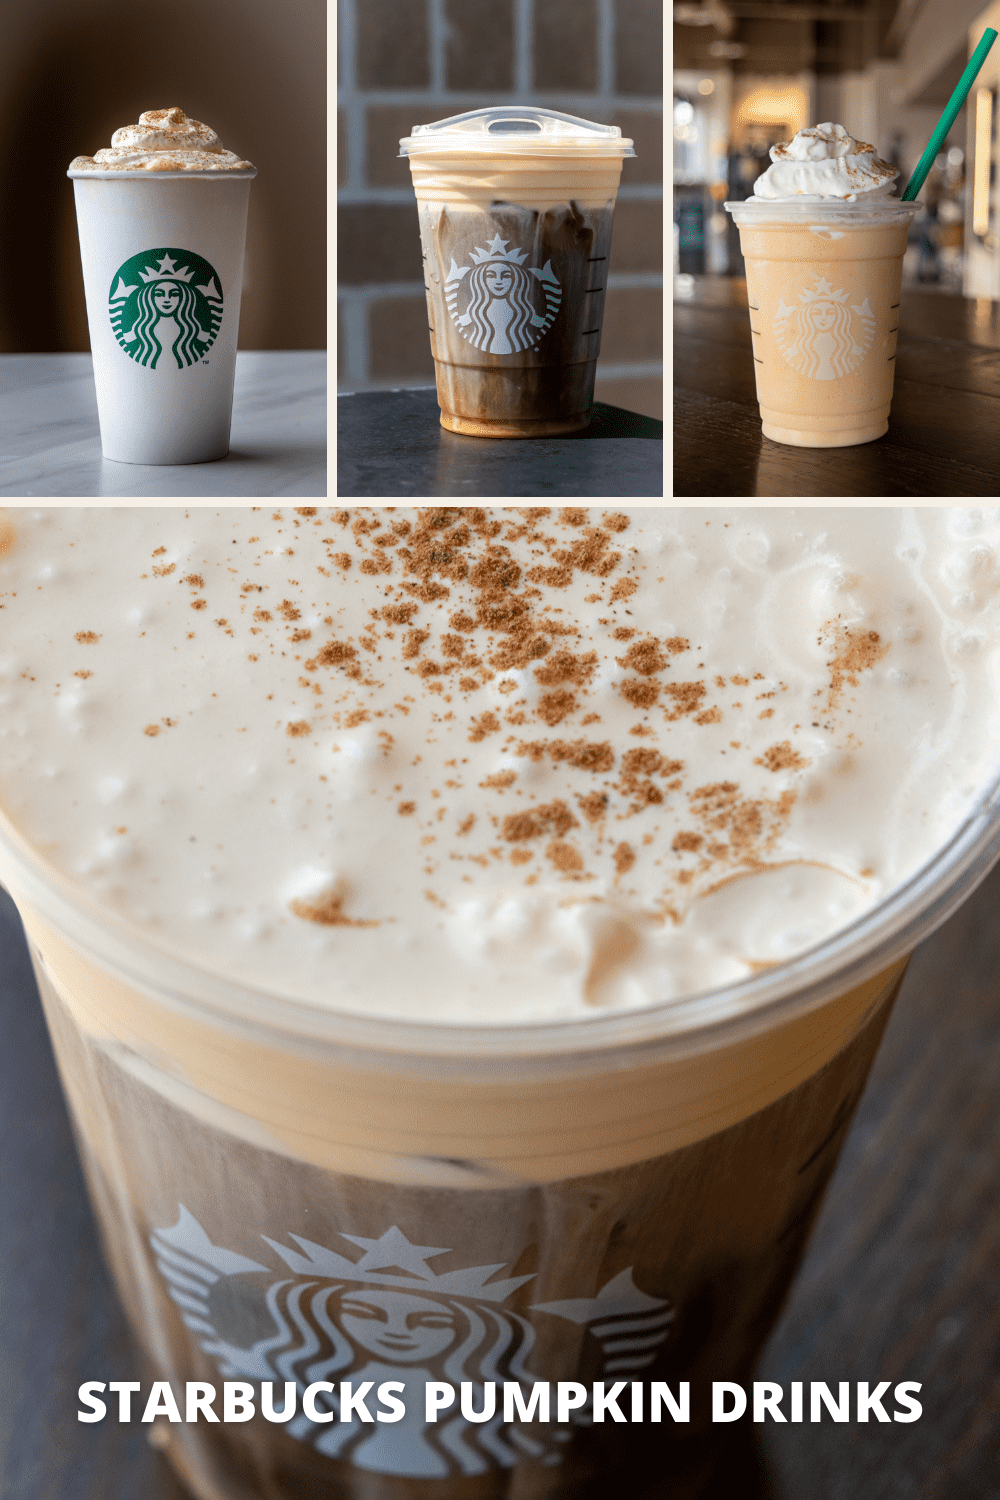 Lineup of Starbucks pumpkin drinks.